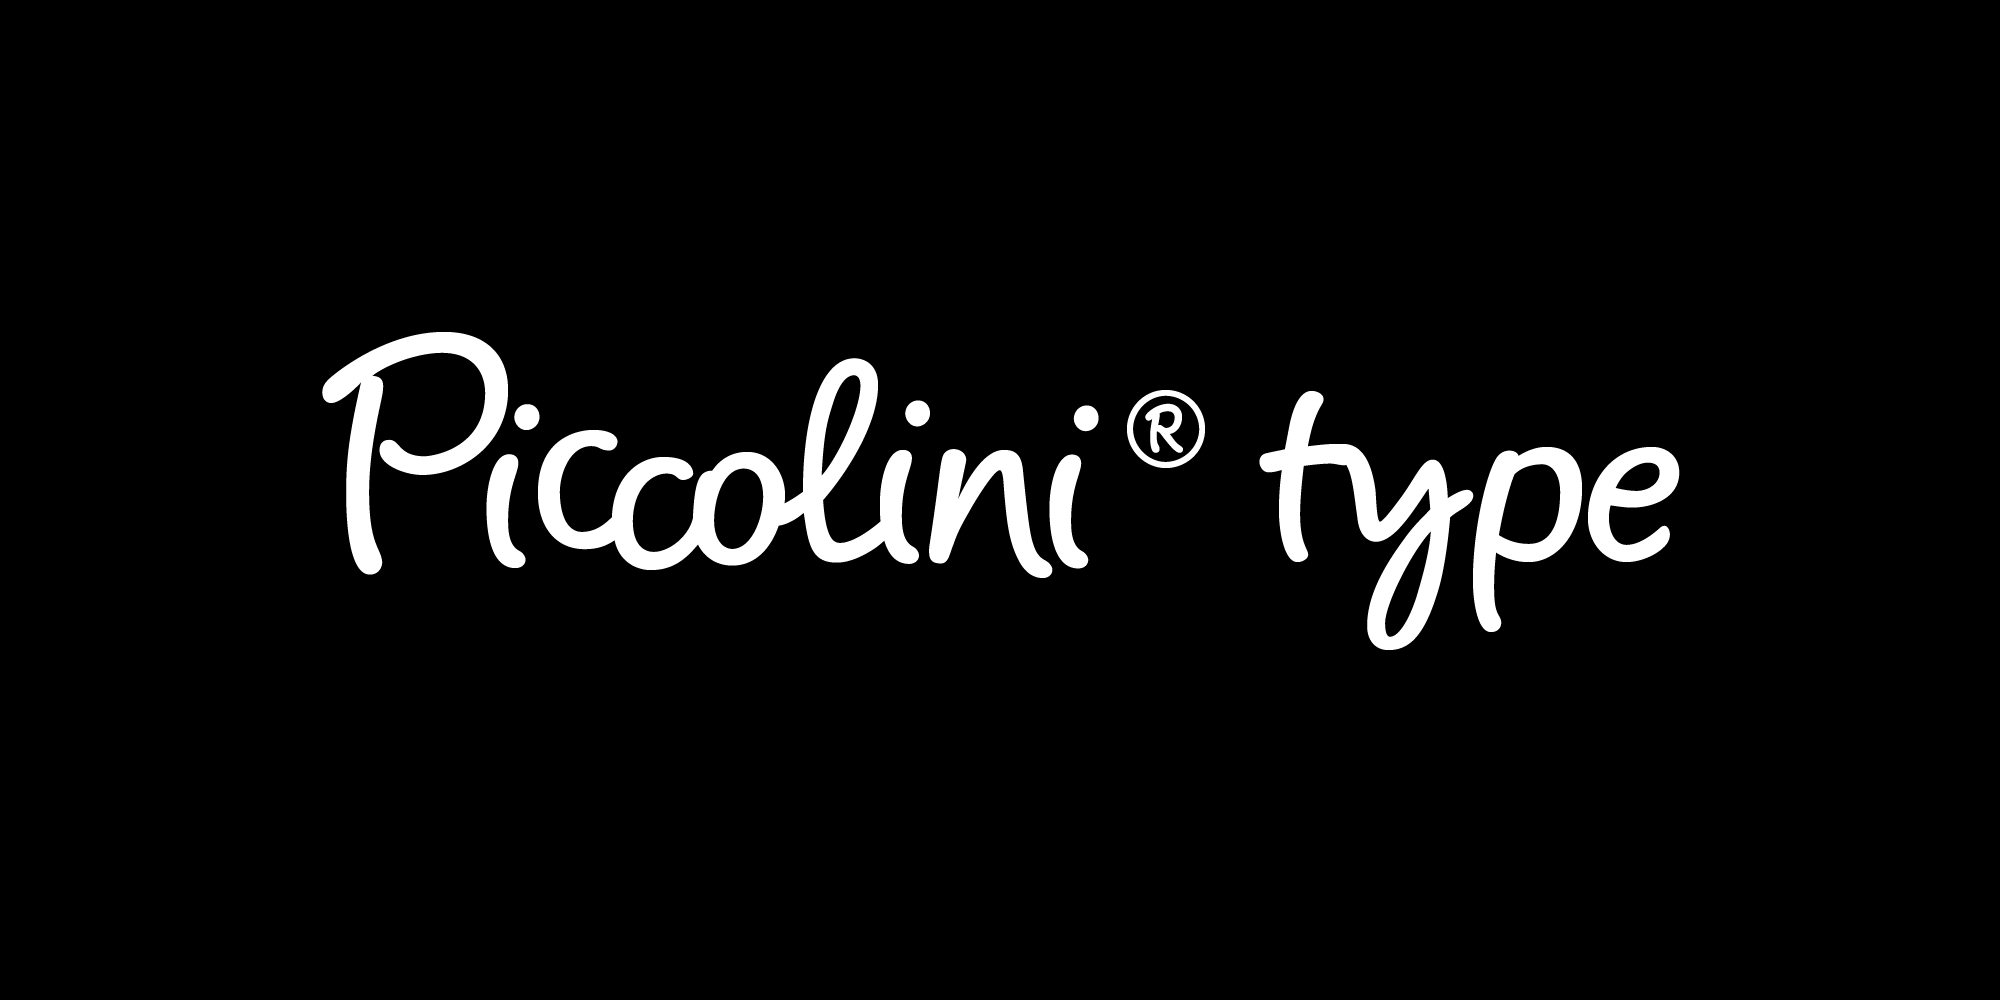 Piccolini font nameplate